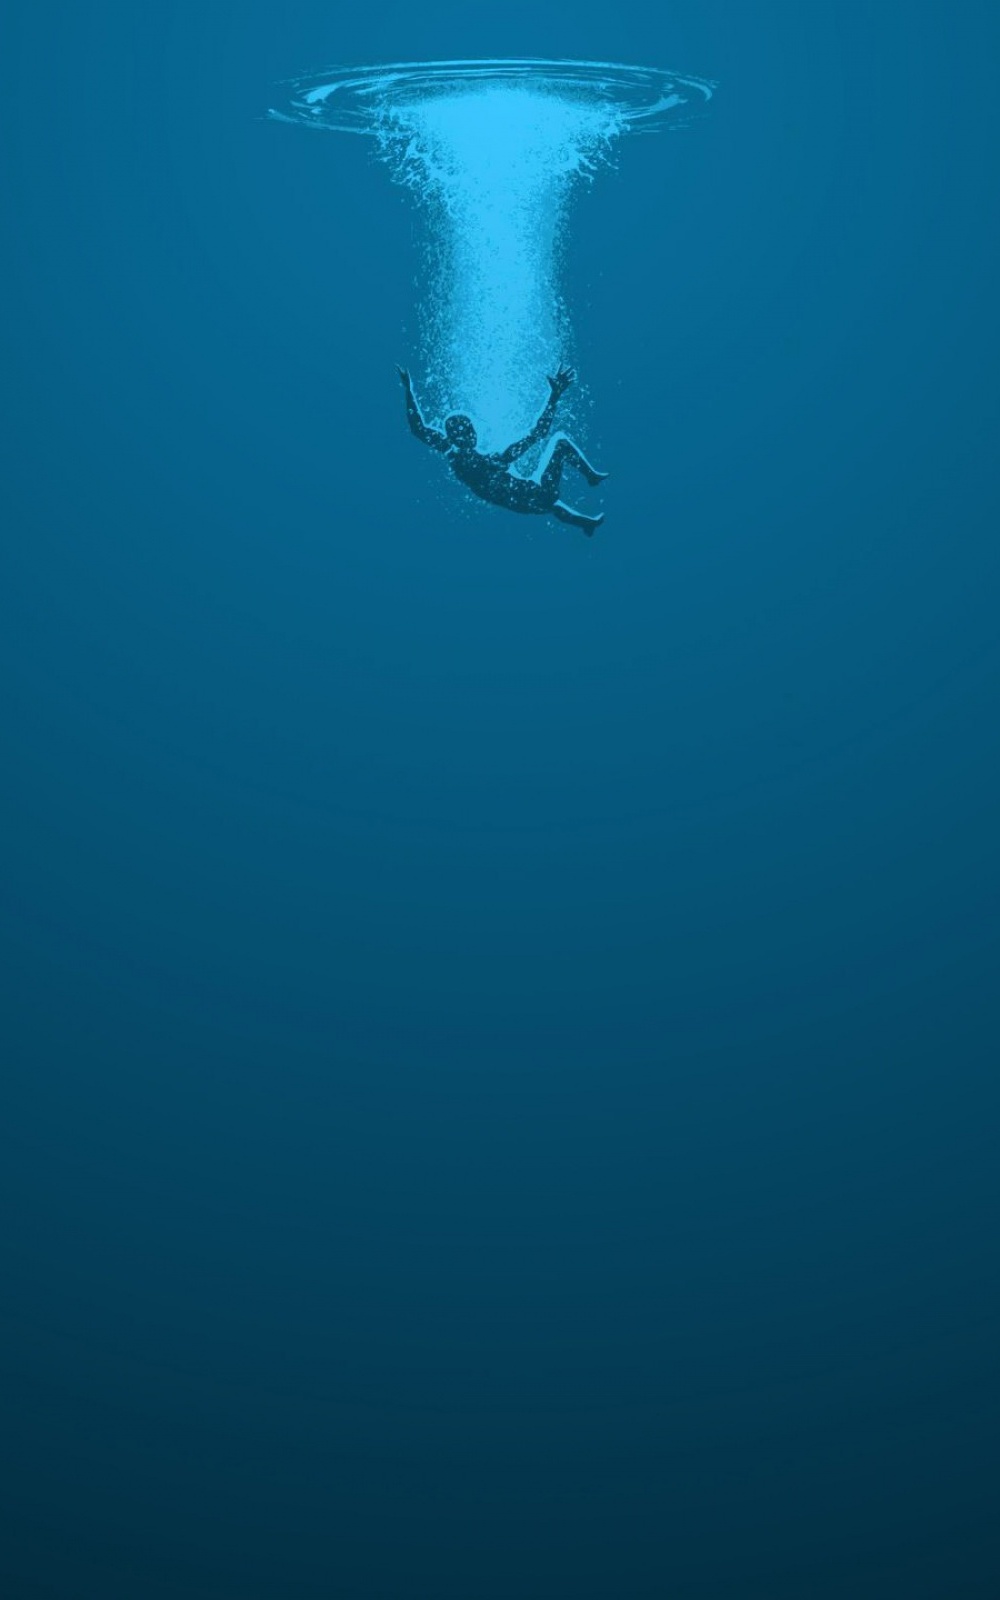 Man Drowning Blue Water Lockscreen Android Wallpaper